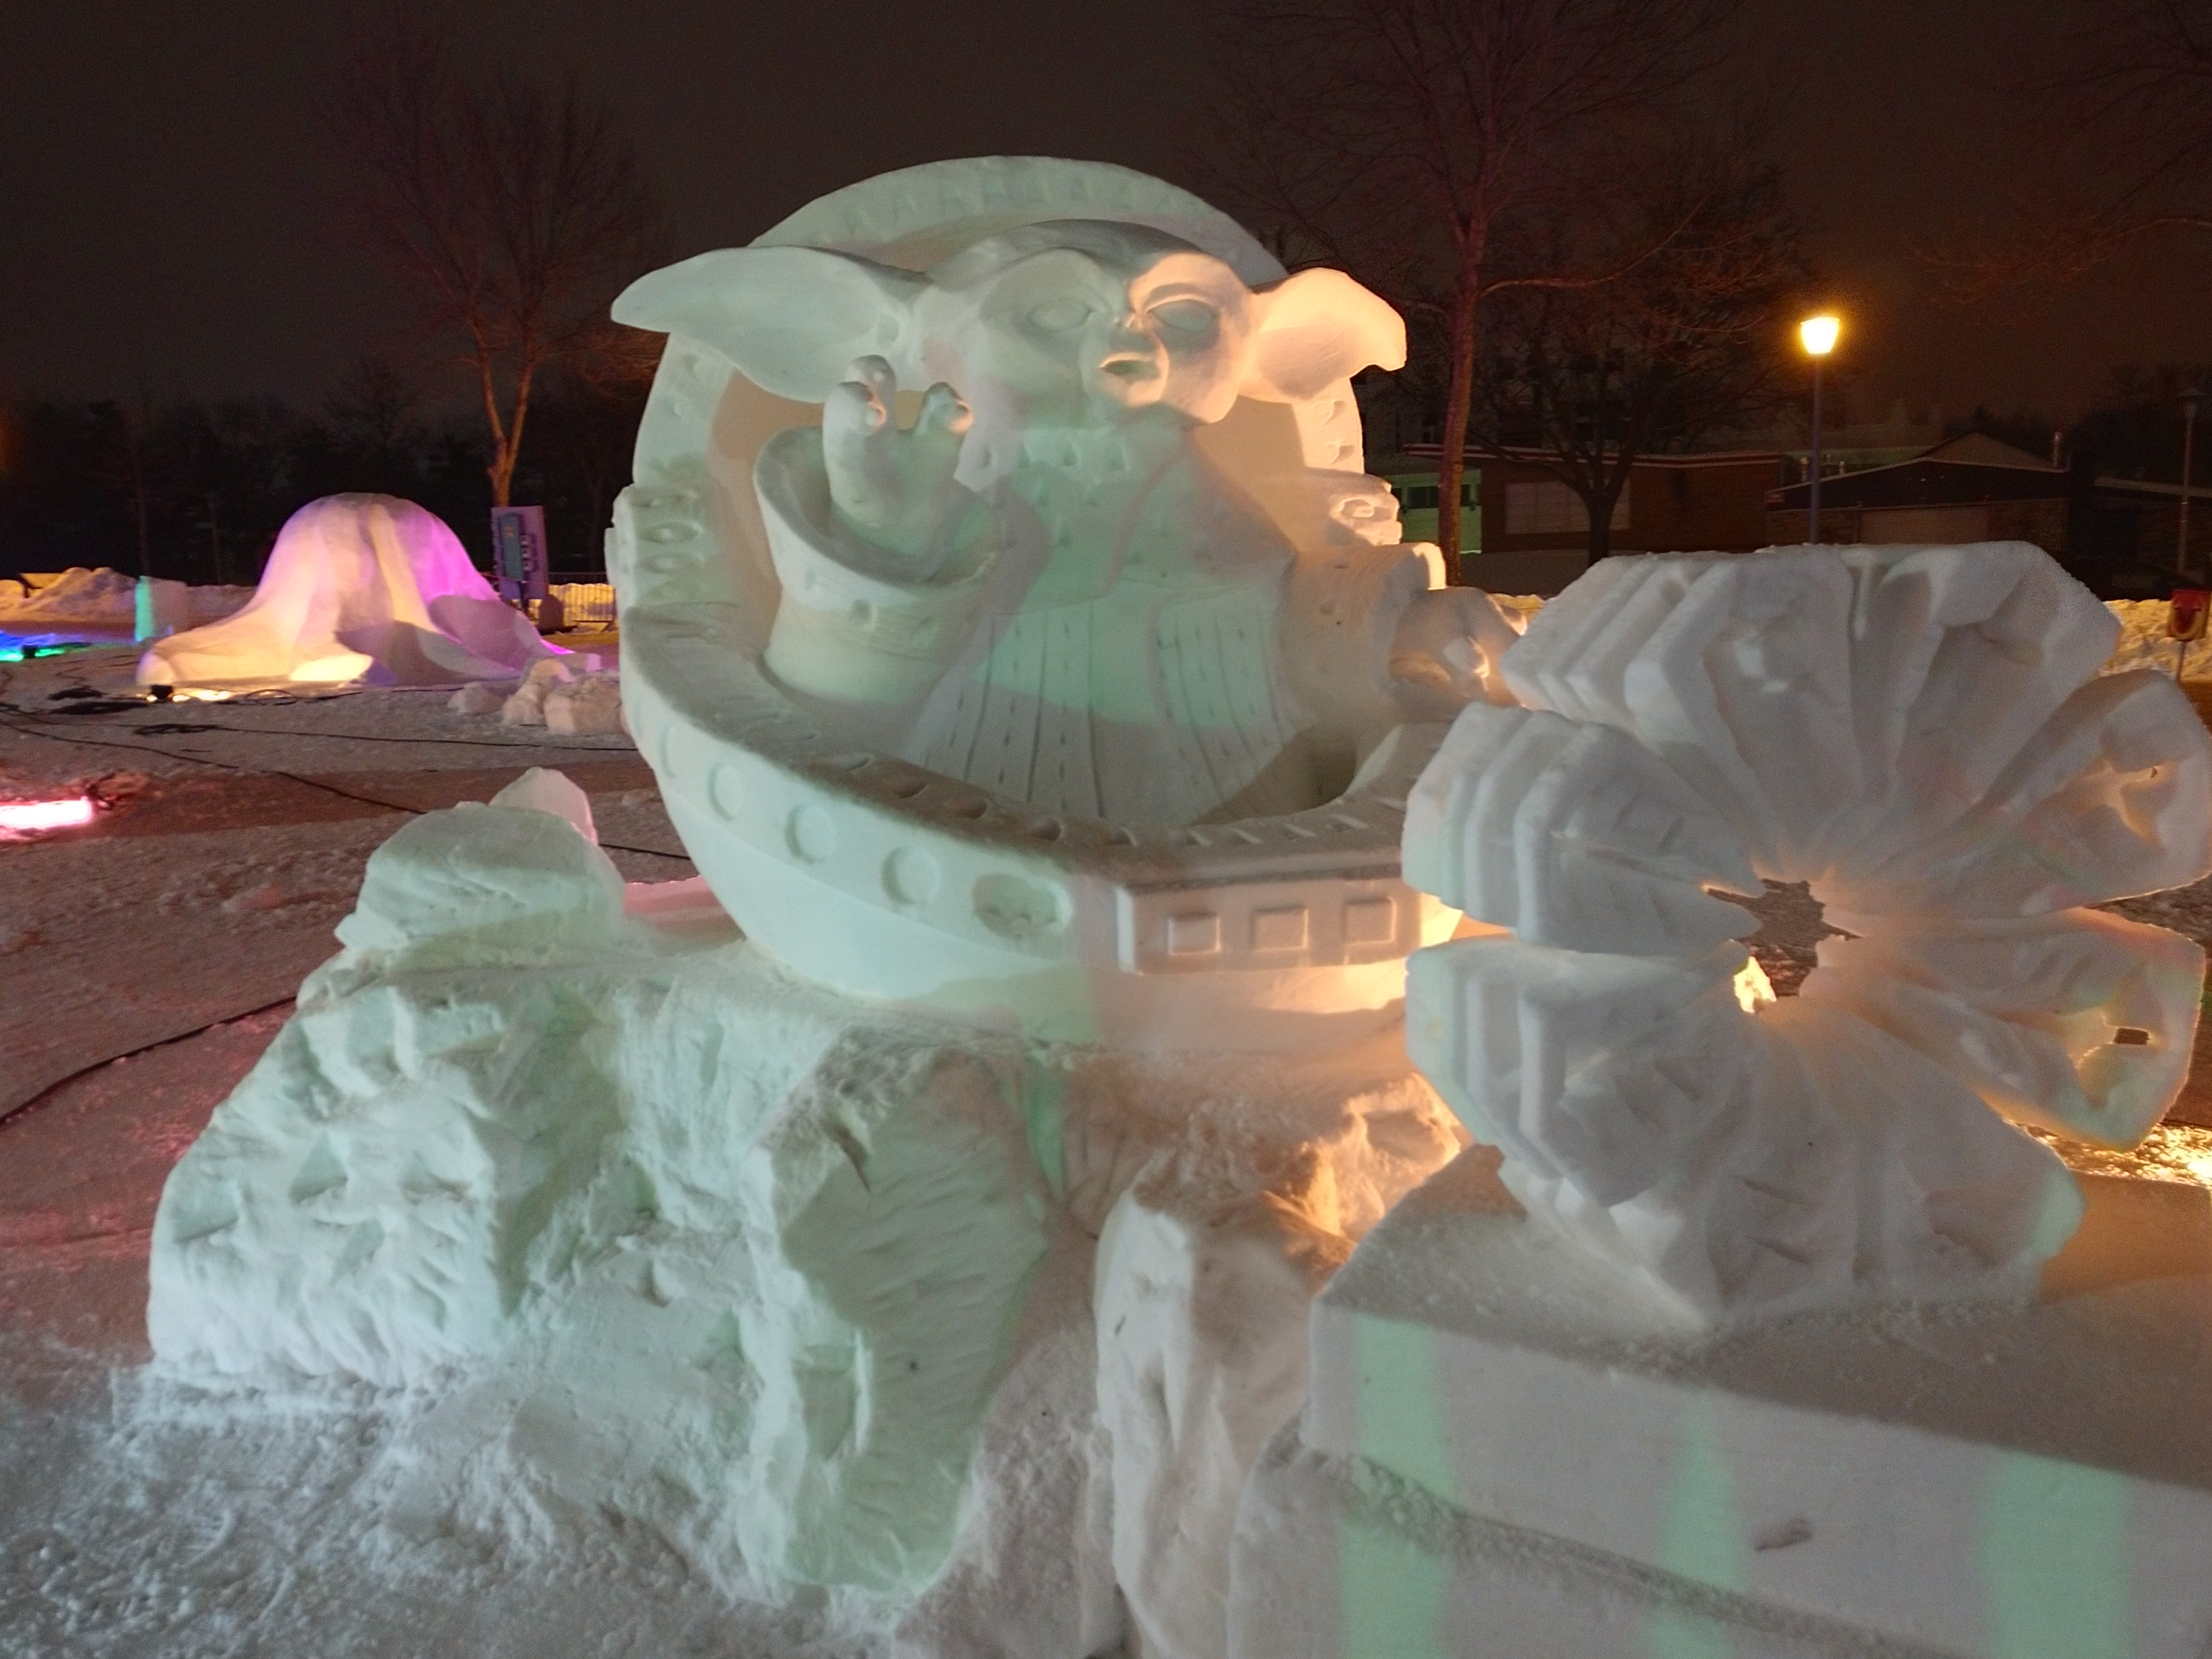 "The Asset" snow sculpture created by the Pig’s Eye Pirates team for the 2020 Saint Paul Winter Carnival in Saint Paul, Minn. (Jason Moe)